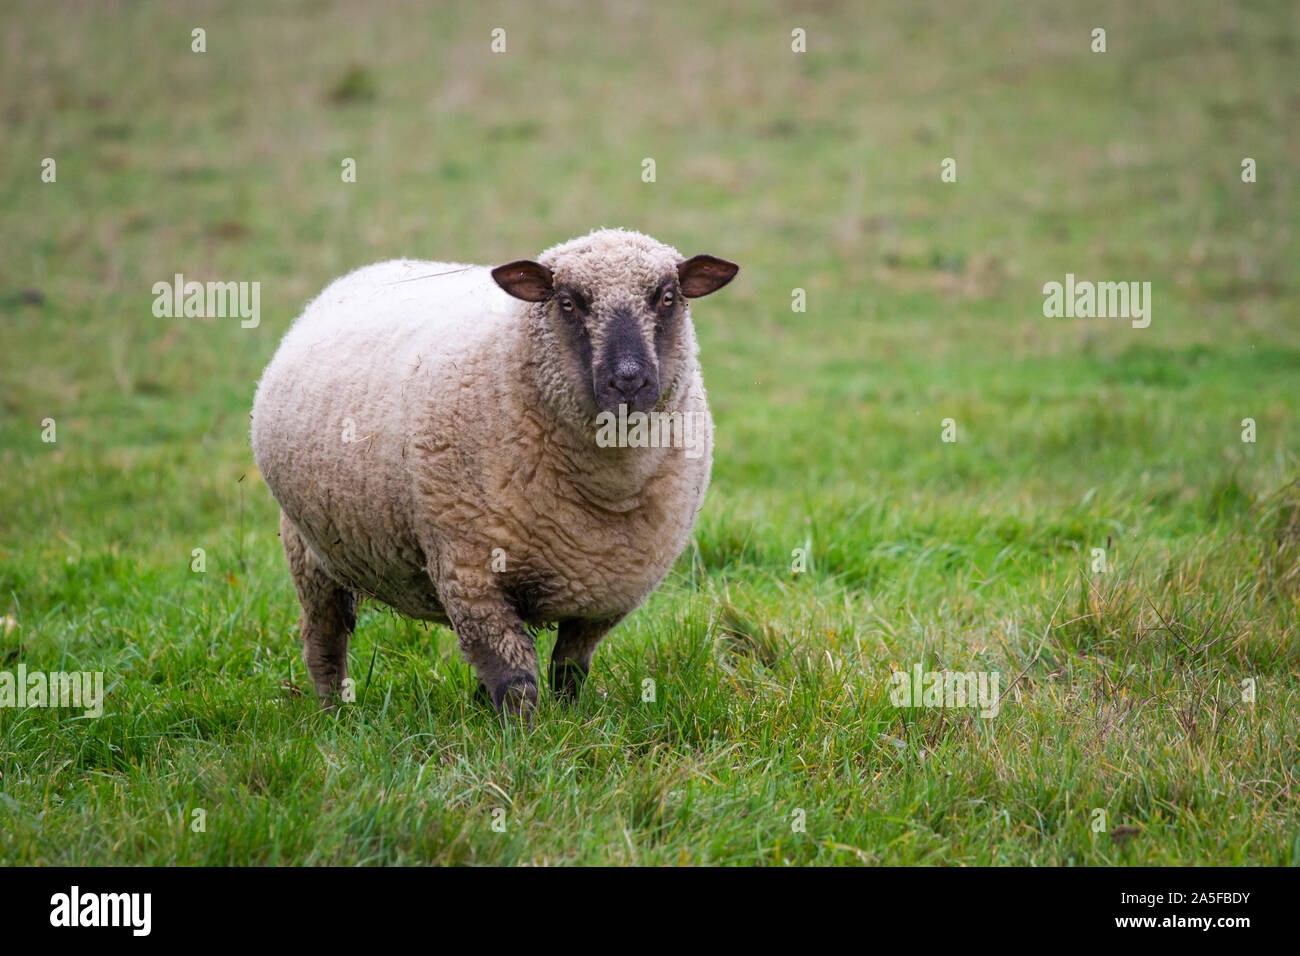 Shropshire sheep Stock Photo